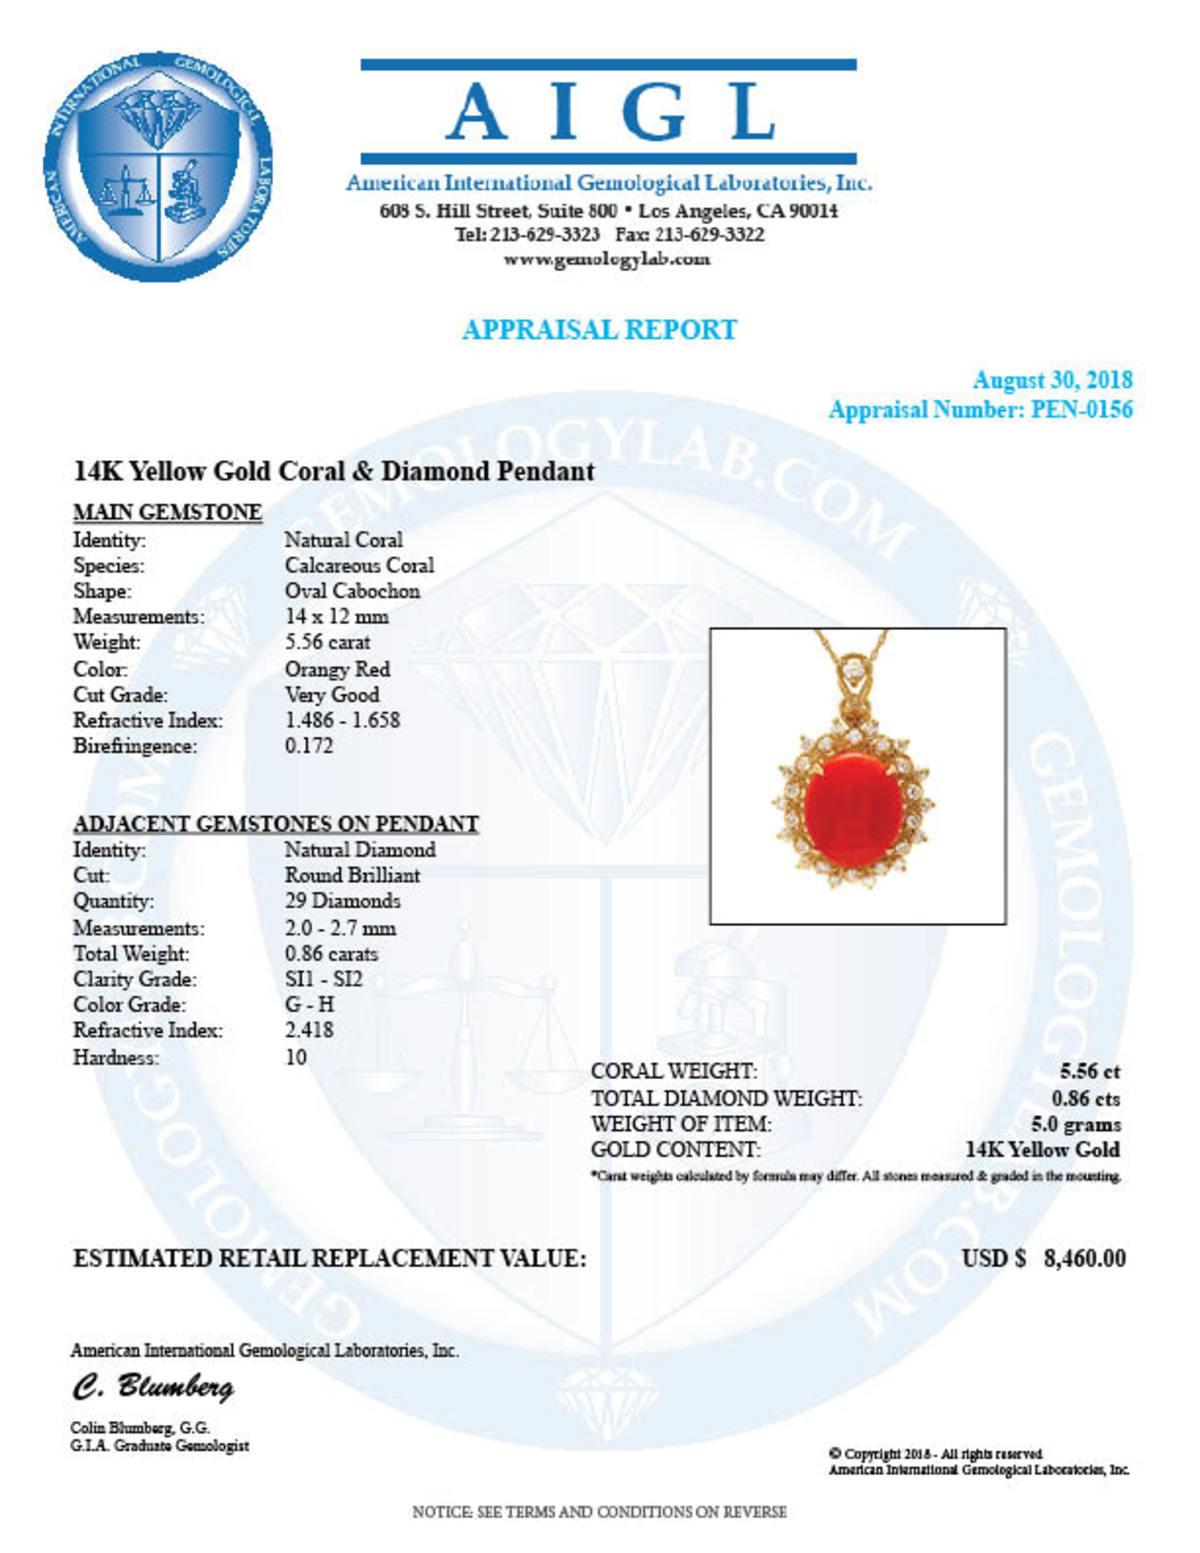 14K Gold 5.56ct Coral 0.86ct Diamond Pendant